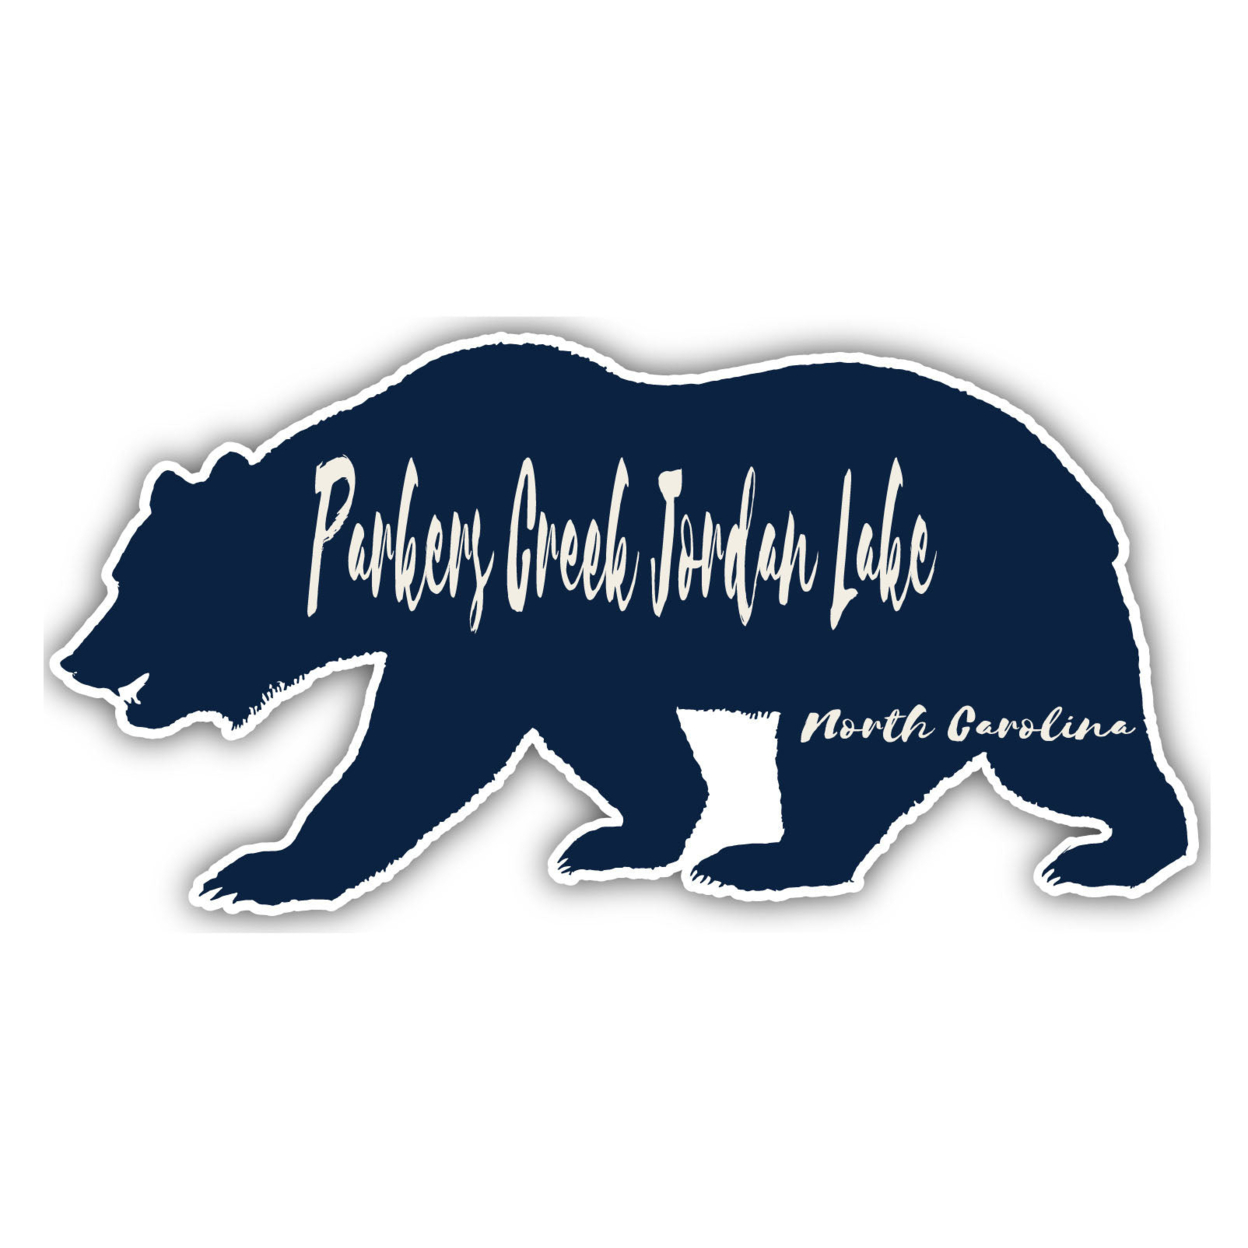 Parkers Creek Jordan Lake North Carolina Souvenir Decorative Stickers (Choose Theme And Size) - Single Unit, 2-Inch, Bear